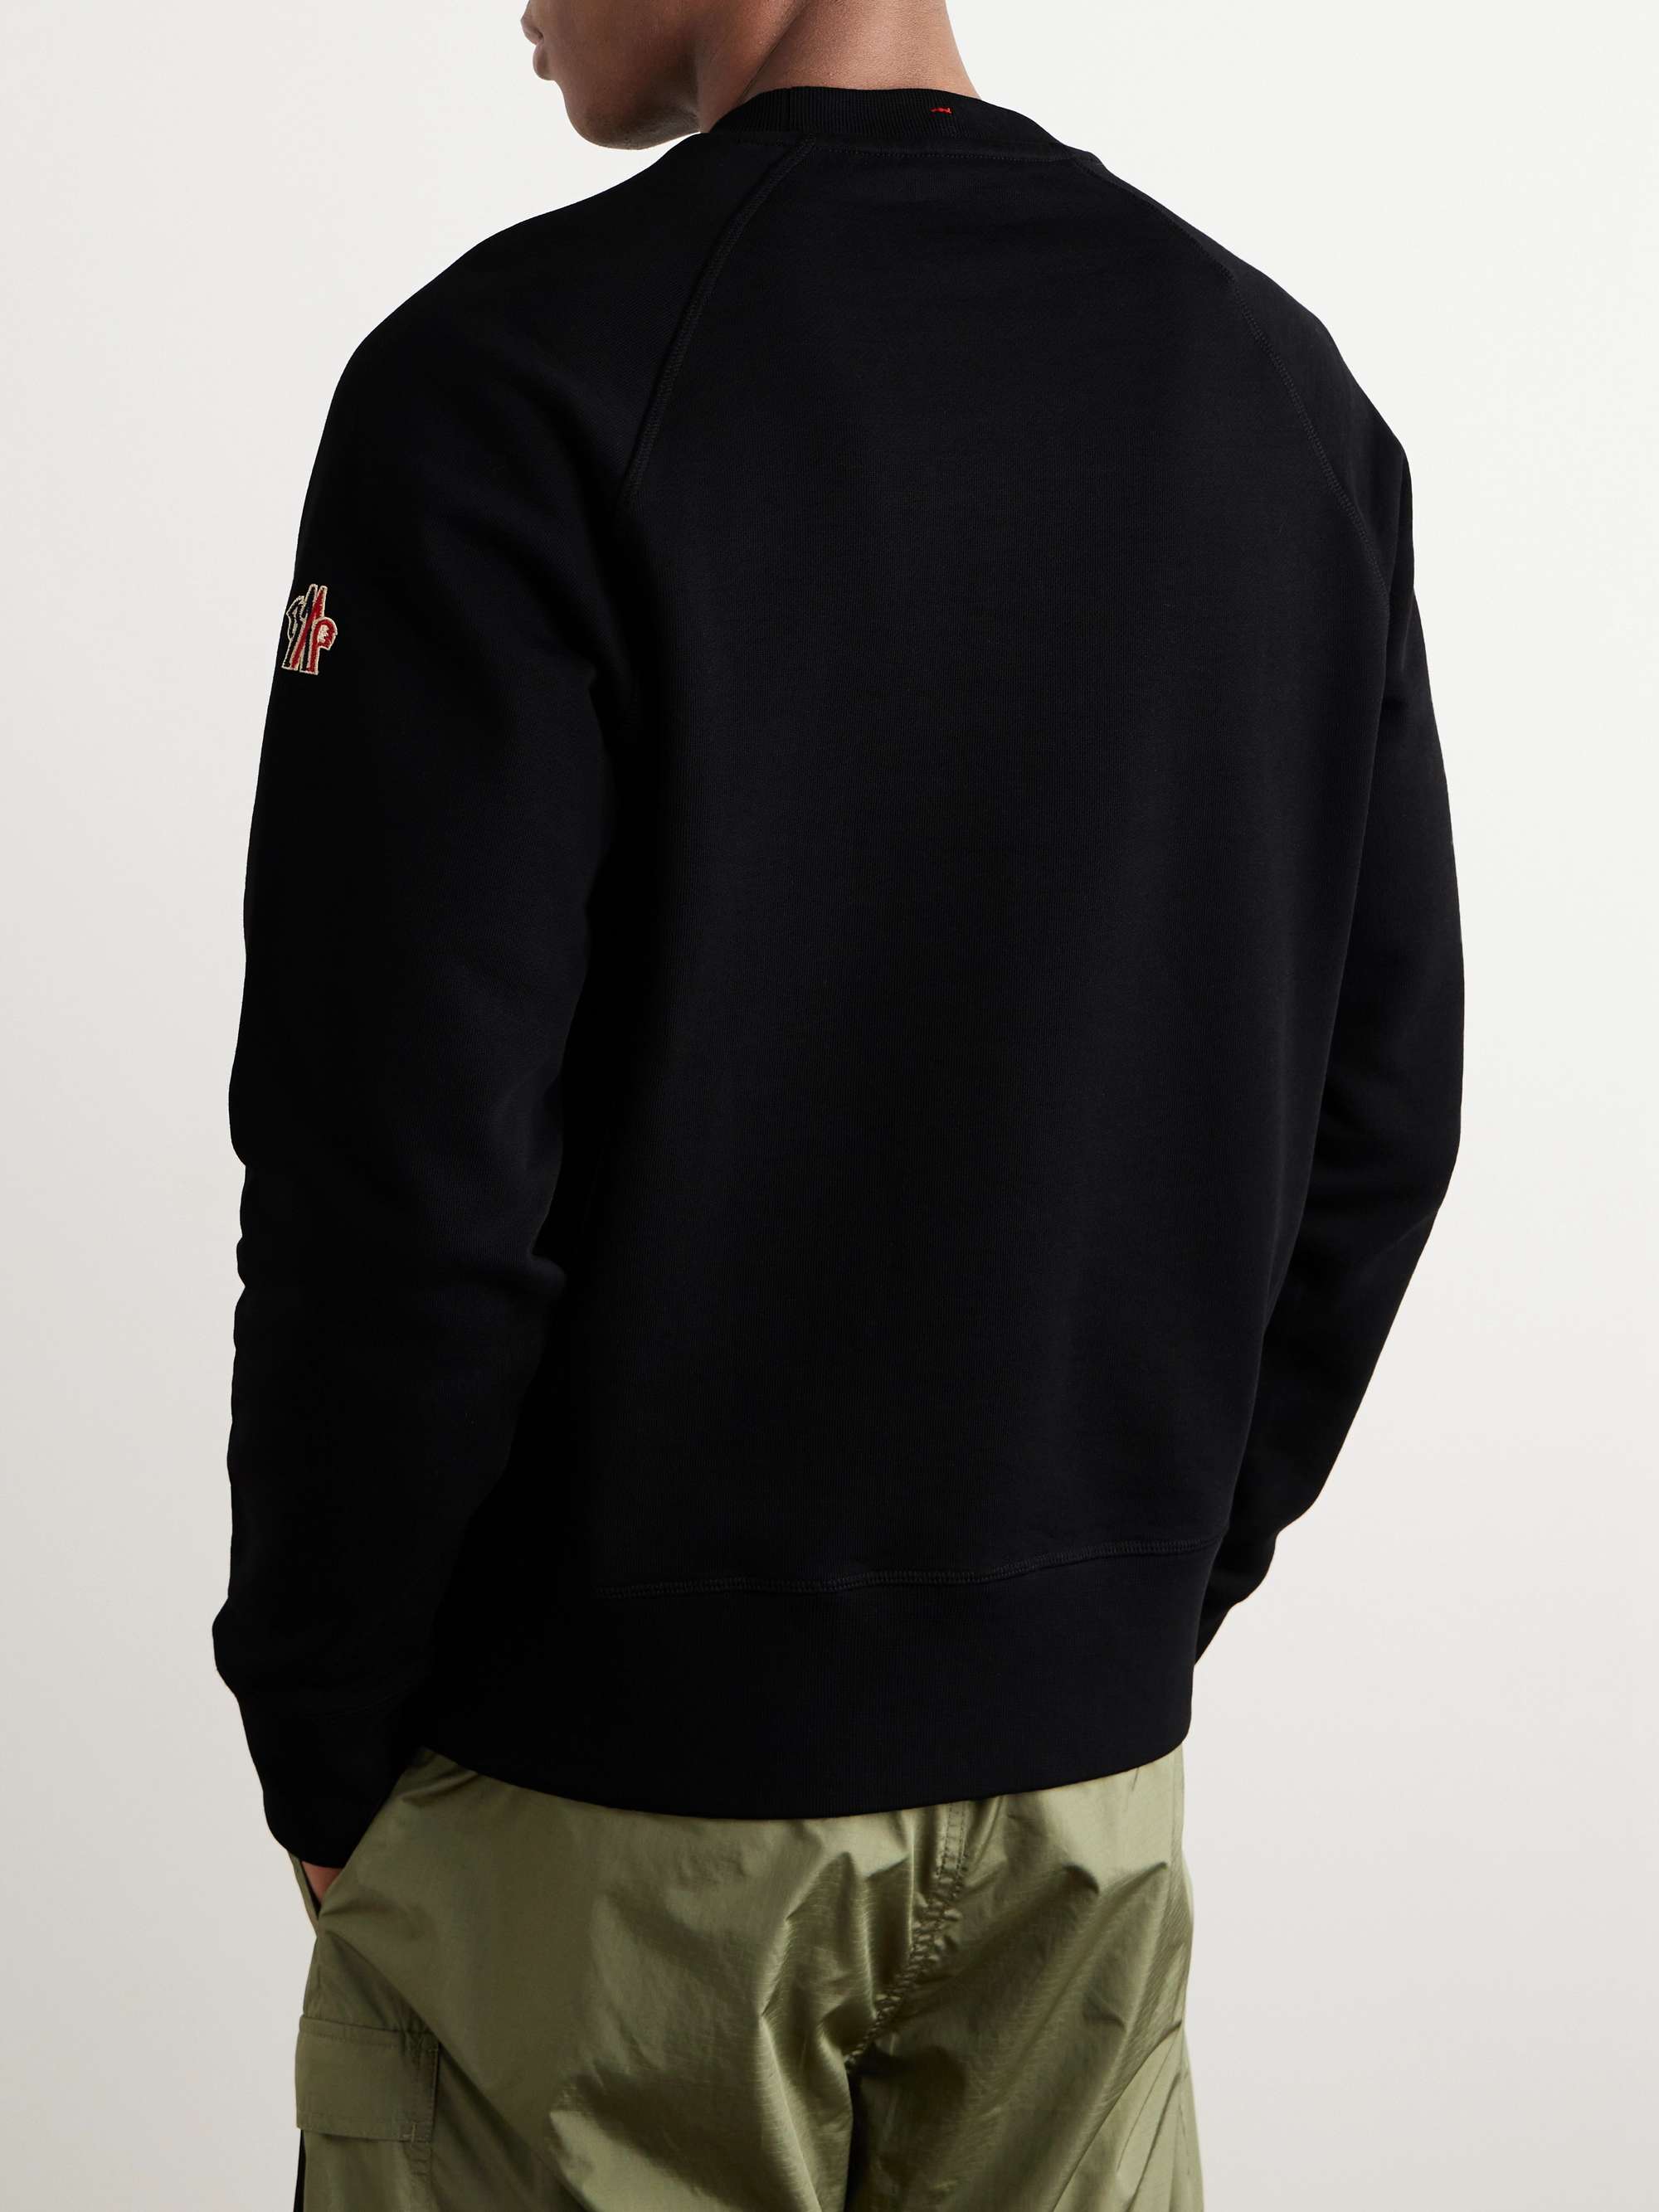 MONCLER GRENOBLE Embroidered Cotton-Fleece Sweatshirt for Men | MR PORTER